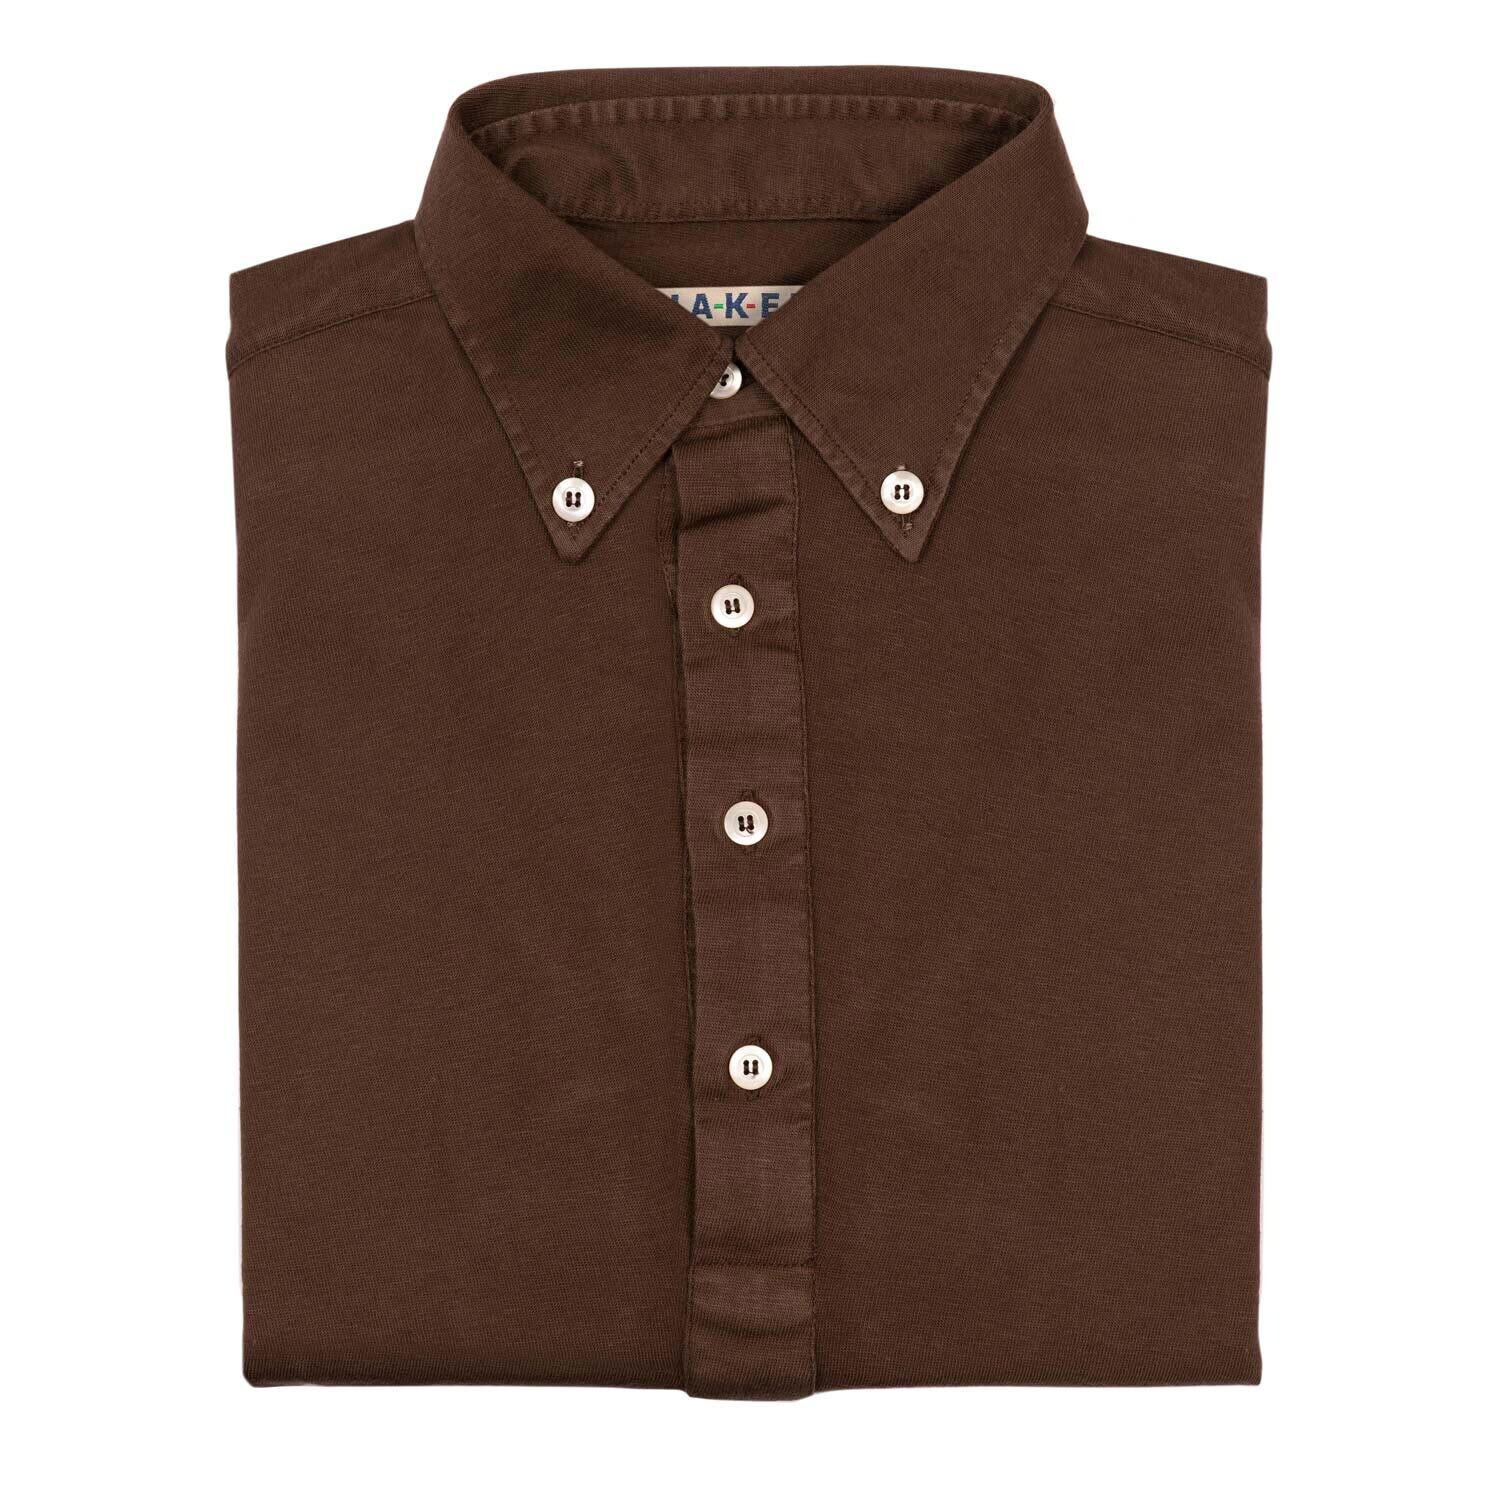 Murgia Jersey cotton / cashmere Polo shirt